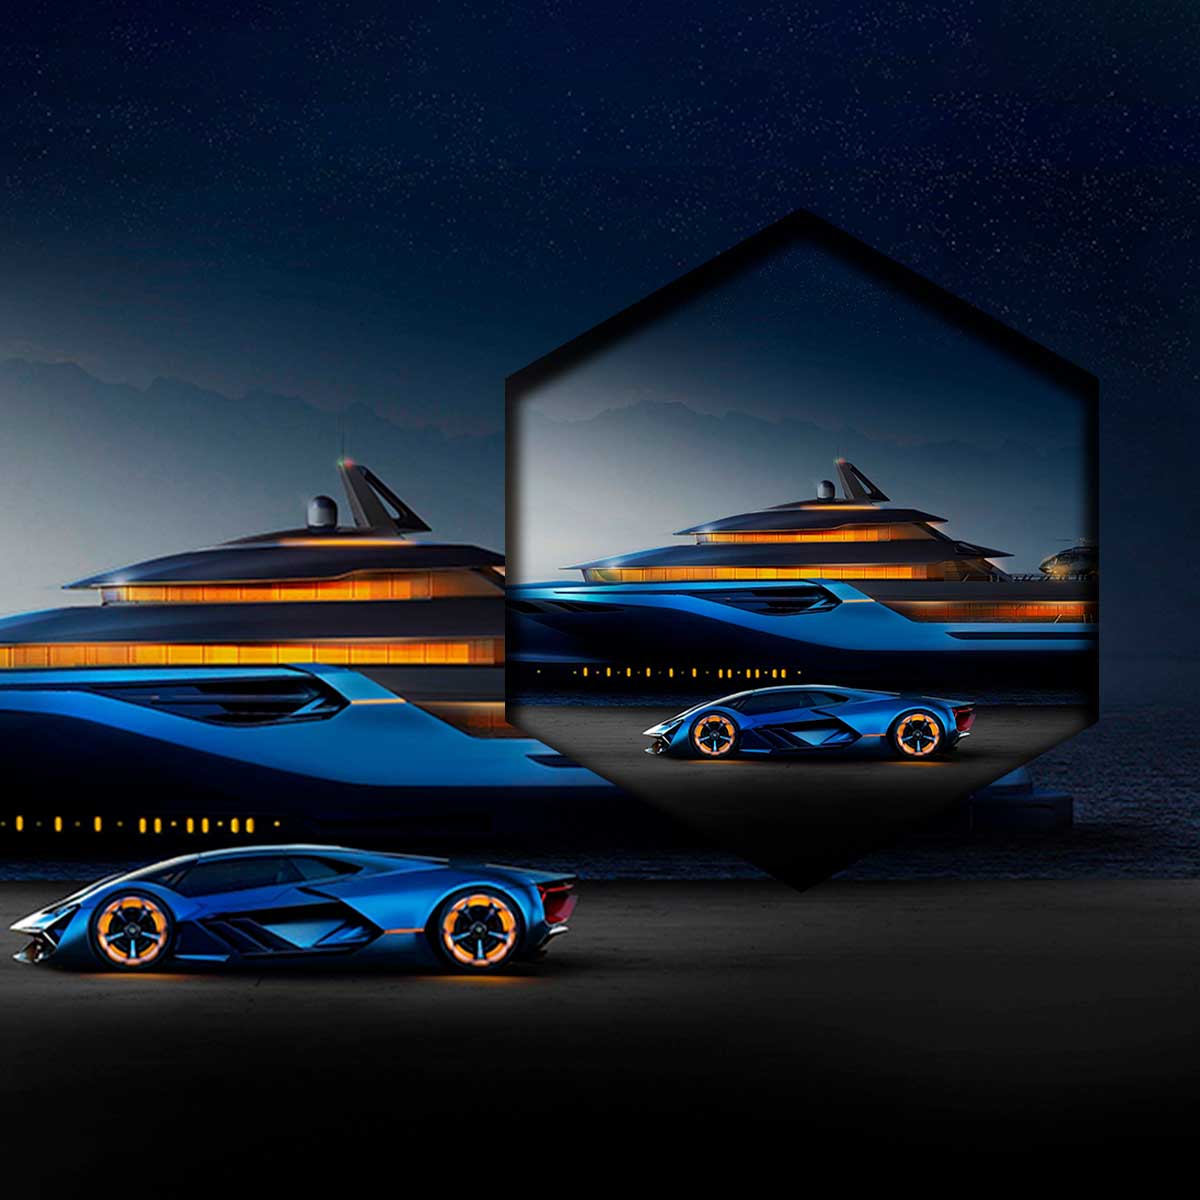 Lamborghini Y Crucero